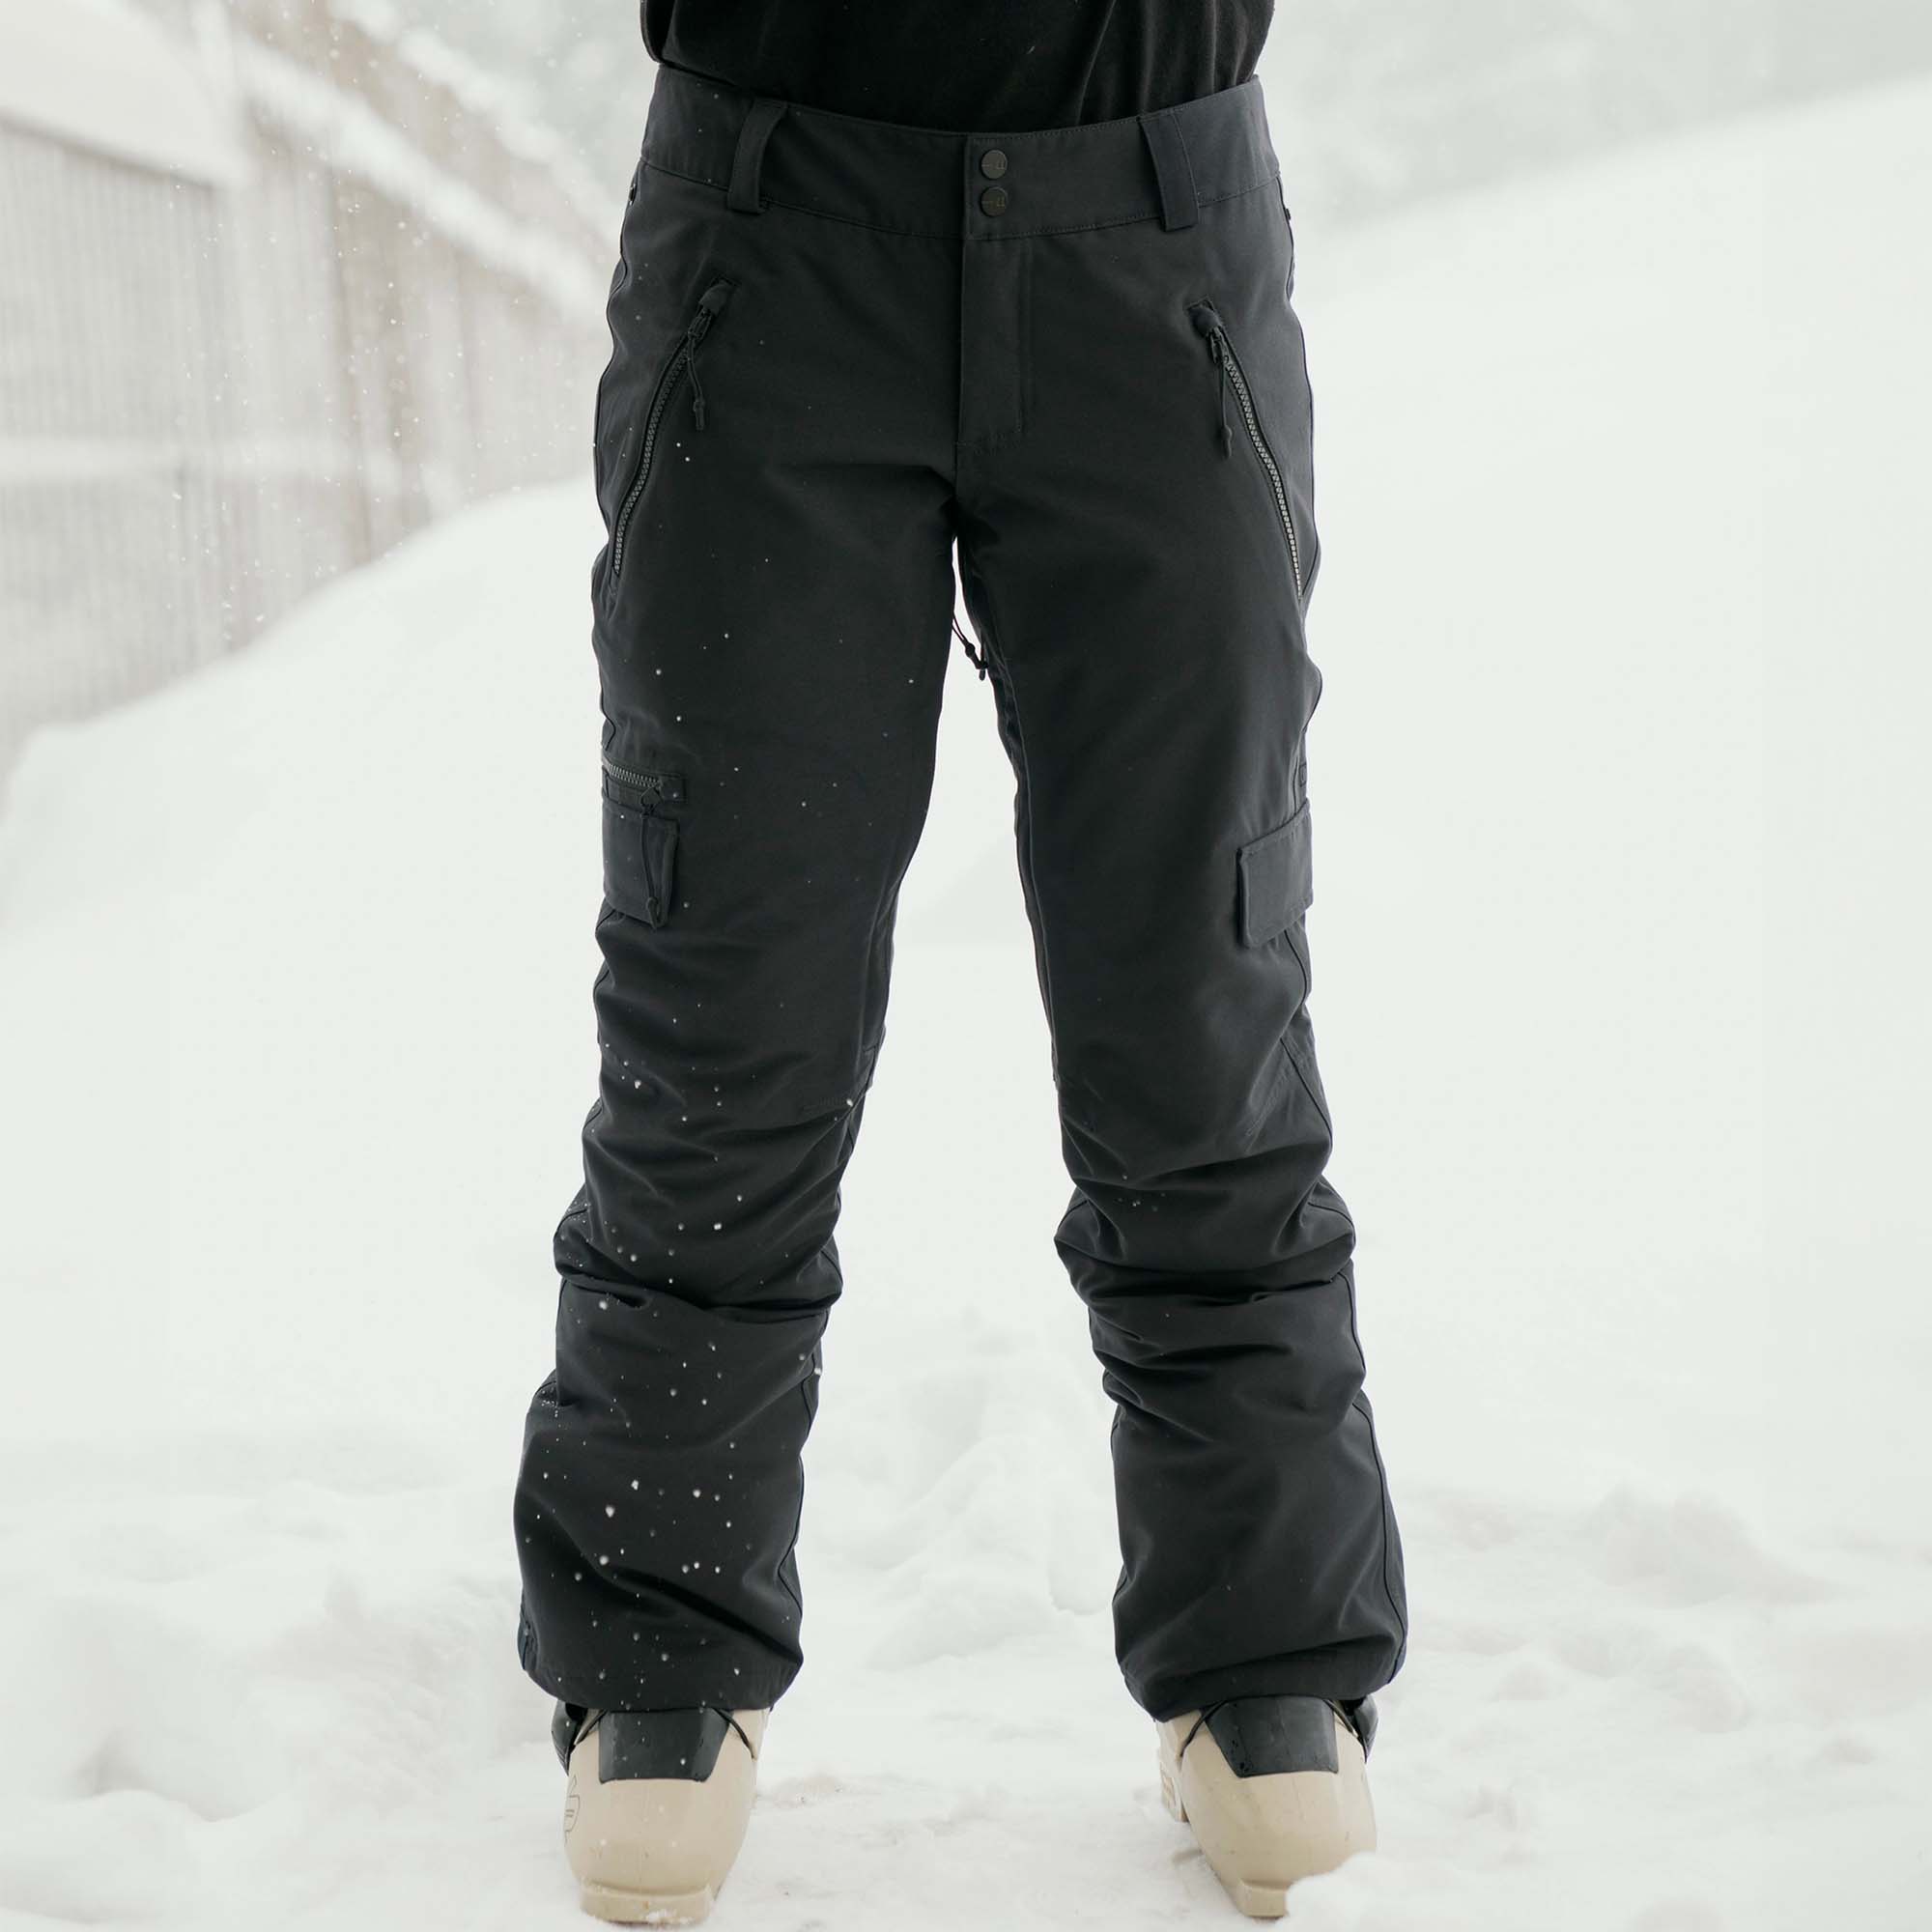 Armada Mula 2L Women's Ski/Snowboard Pants